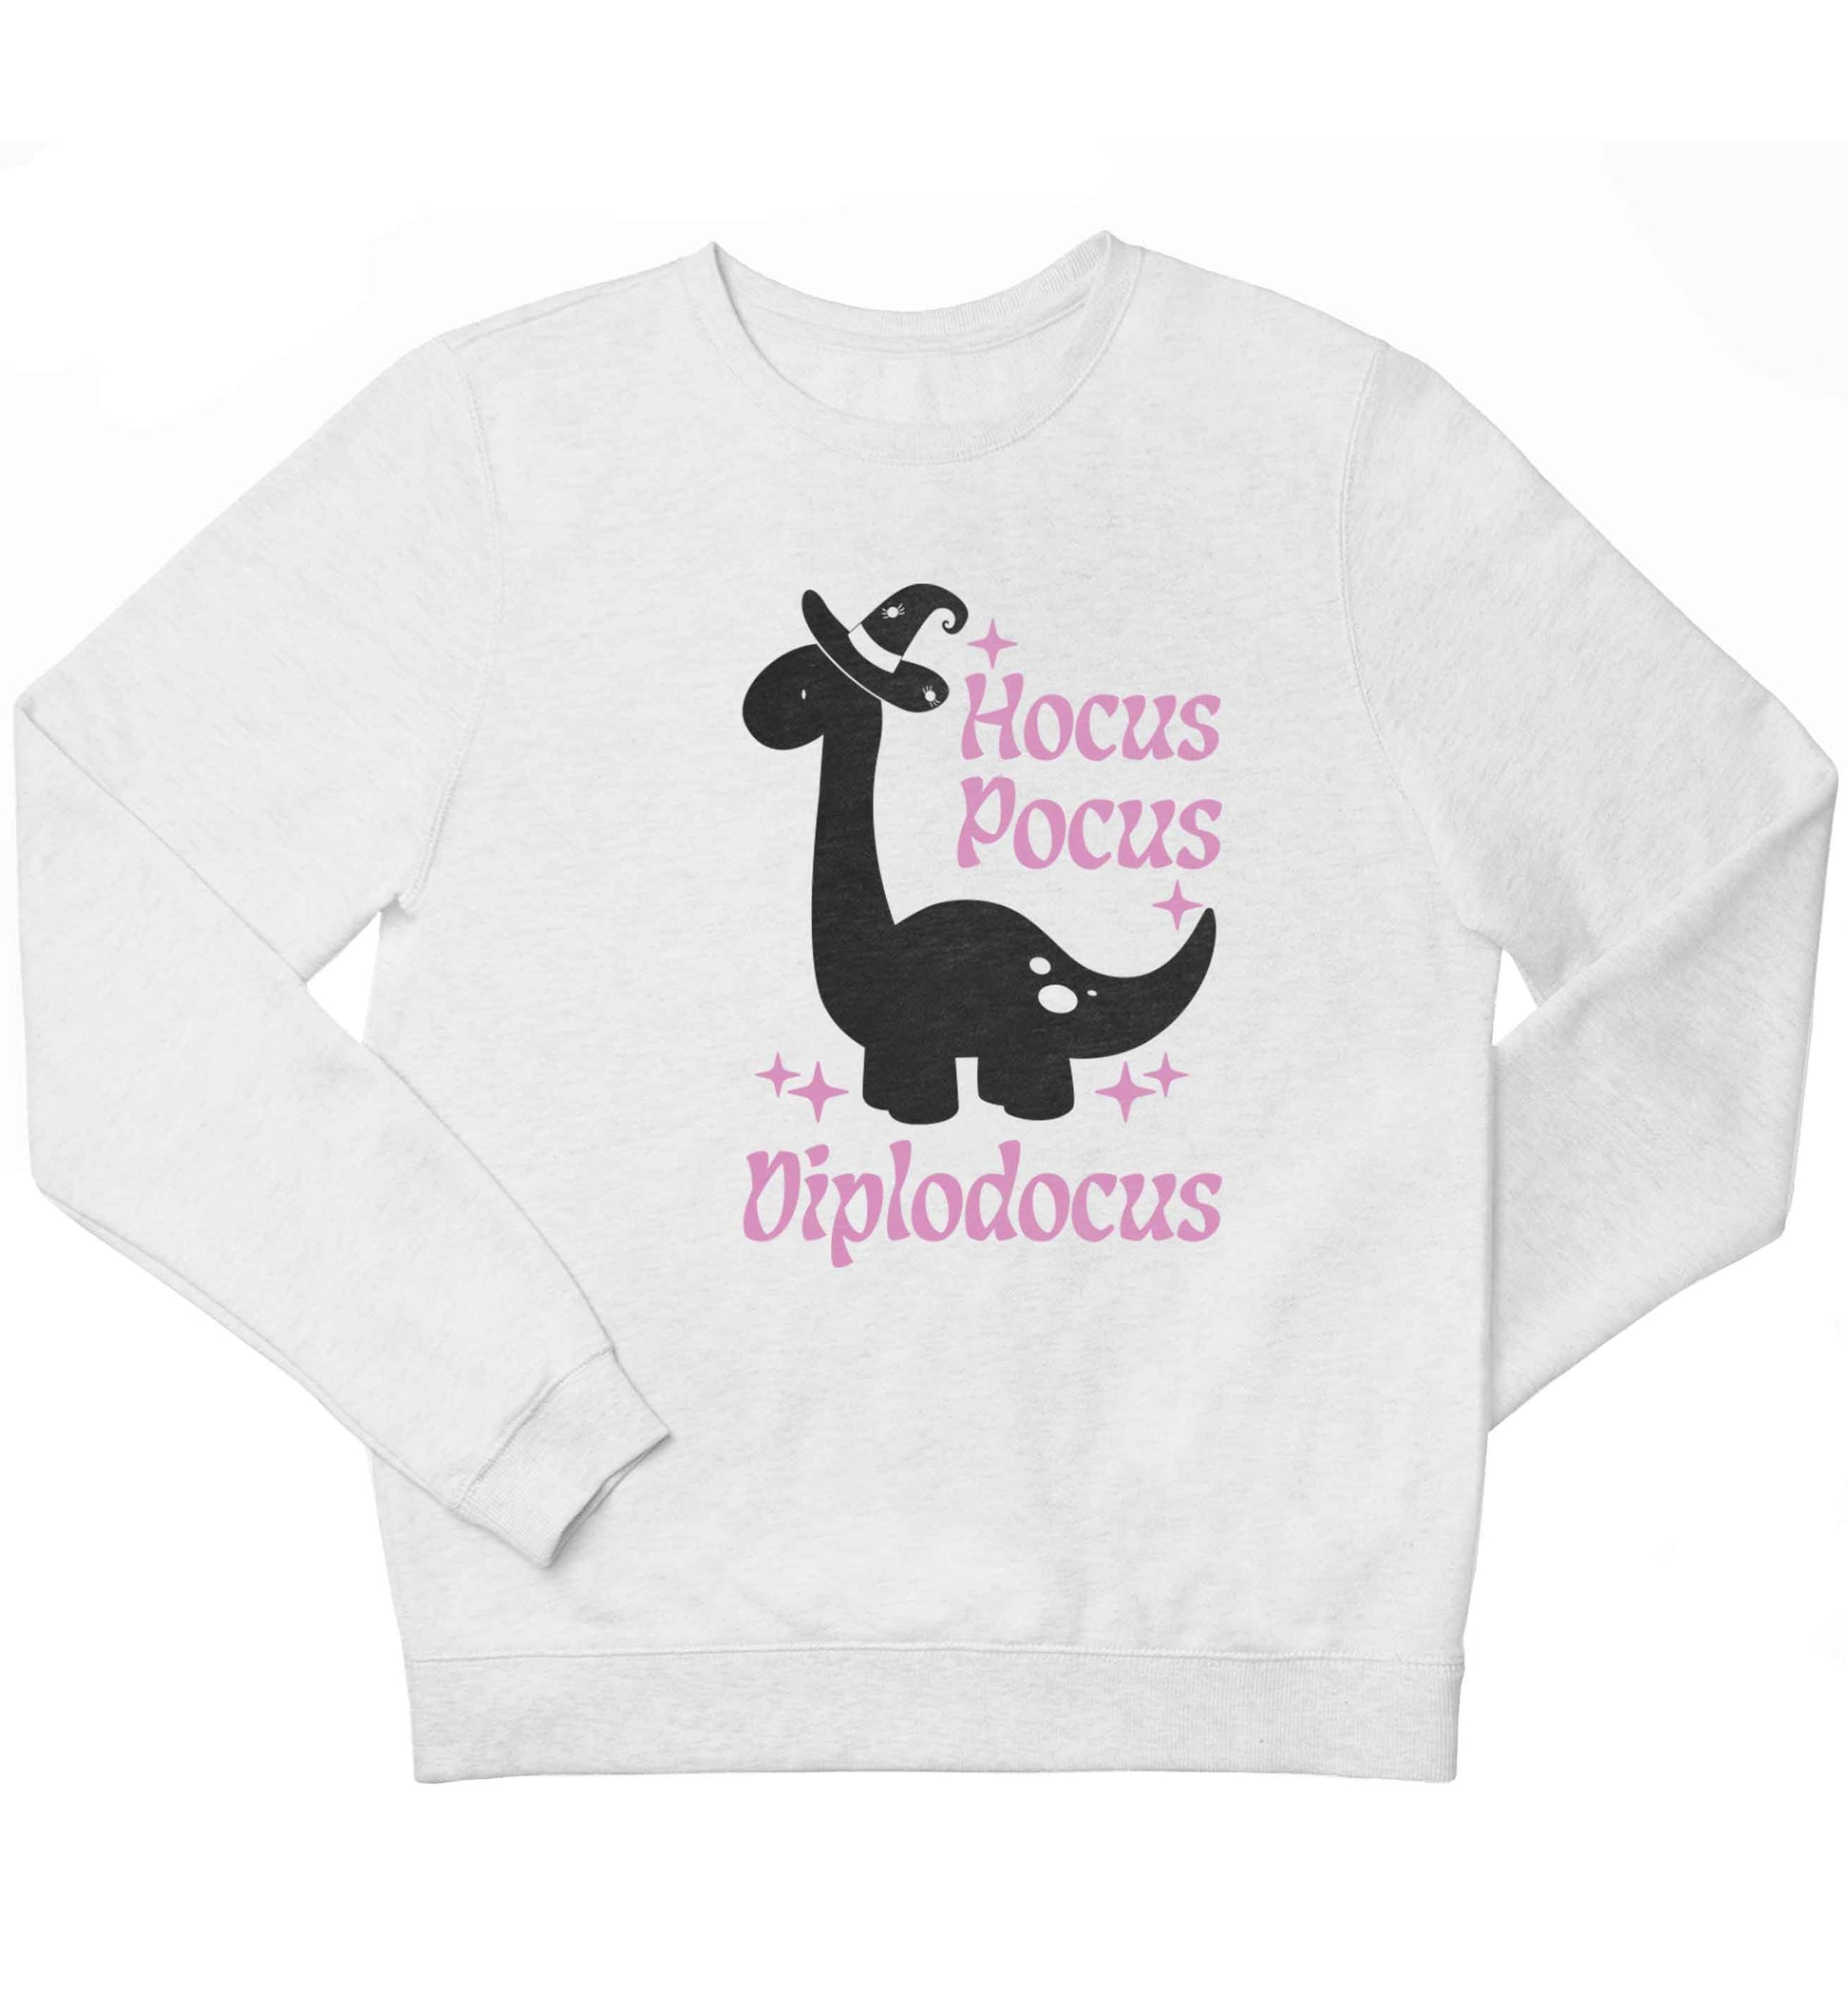 Hocus pocus diplodocus Kit children's white sweater 12-13 Years